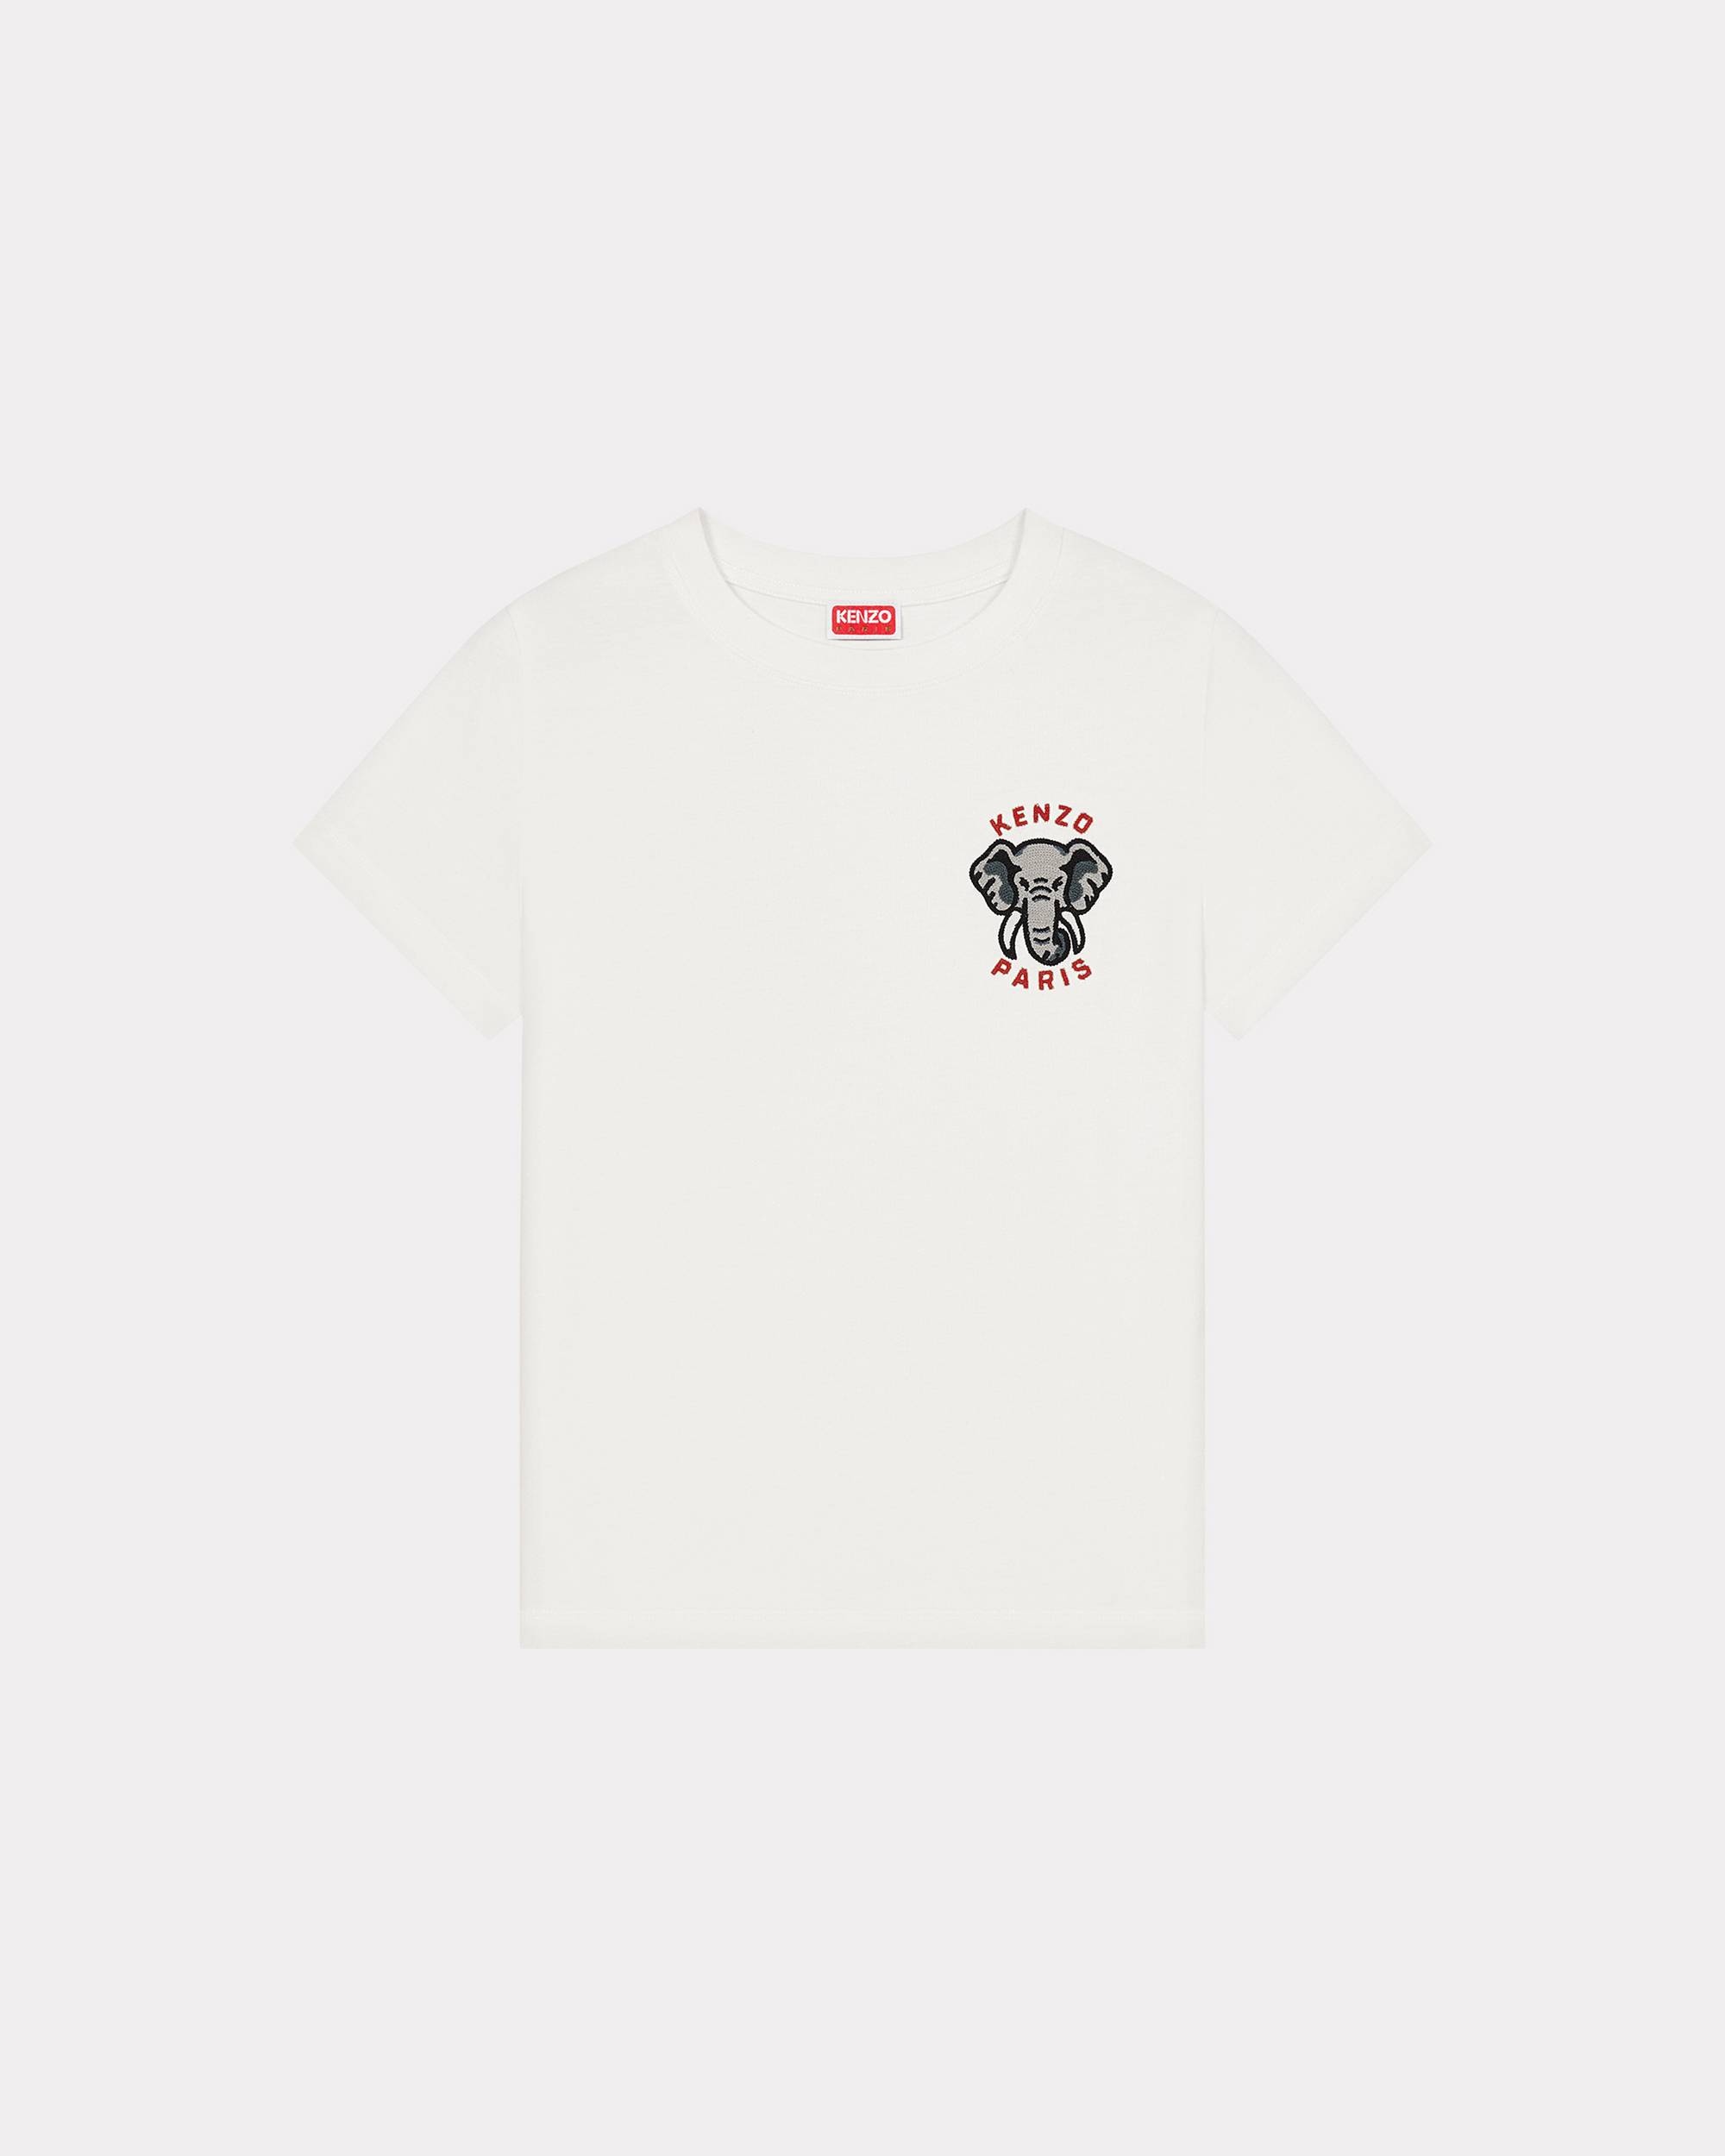 'KENZO Elephant Crest' embroidered T-shirt - 1